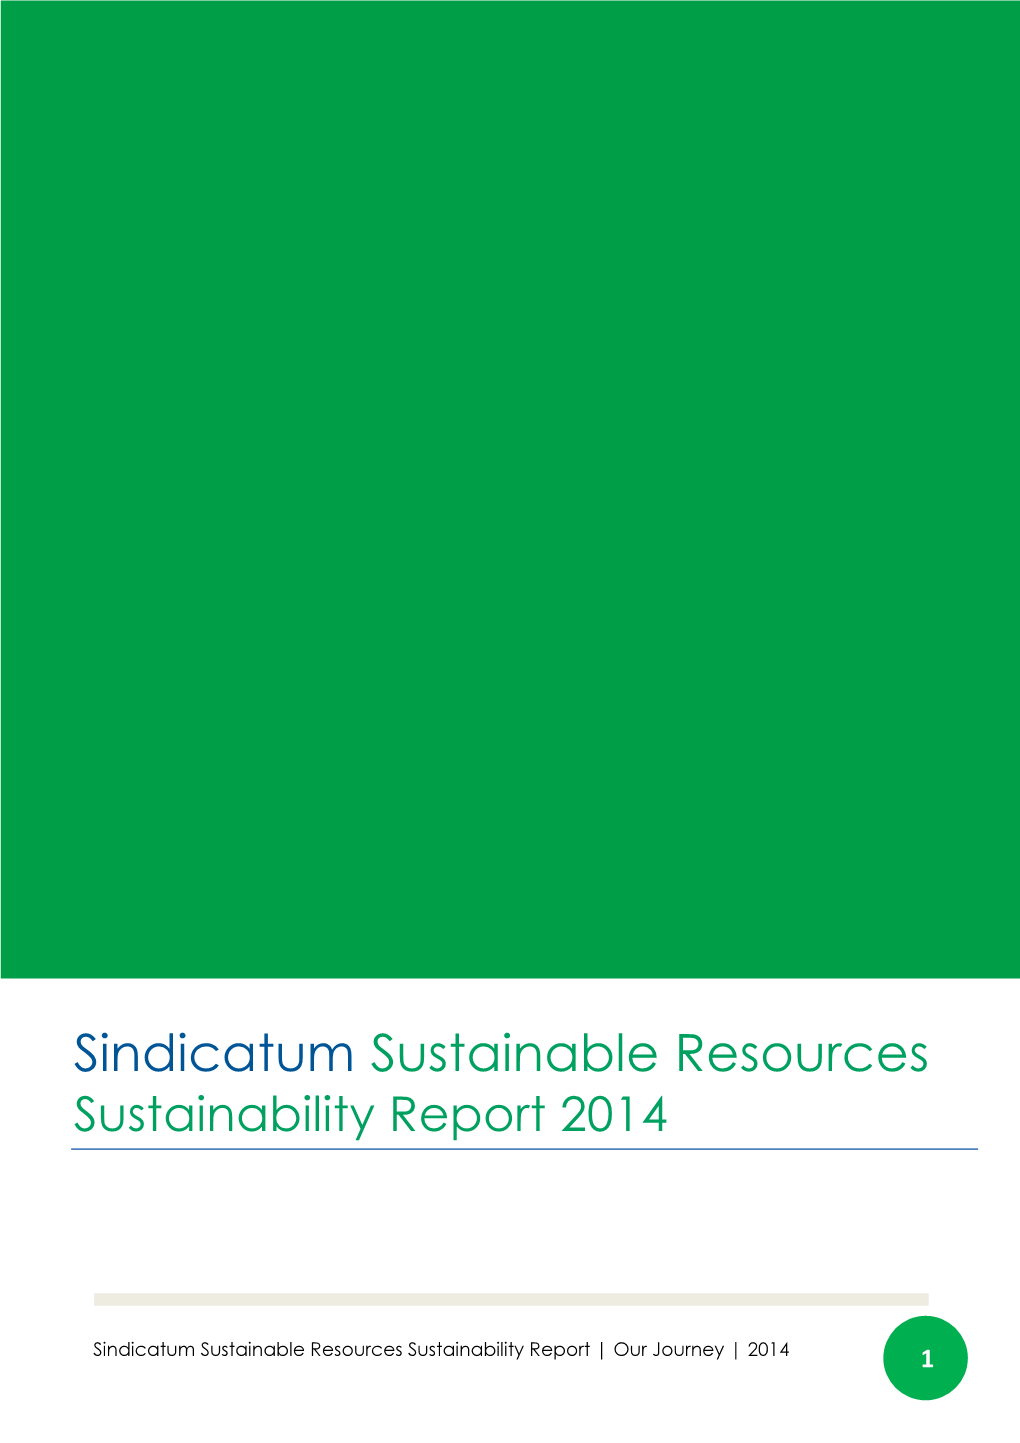 Sindicatum Sustainable Resources Sustainability Report 2014